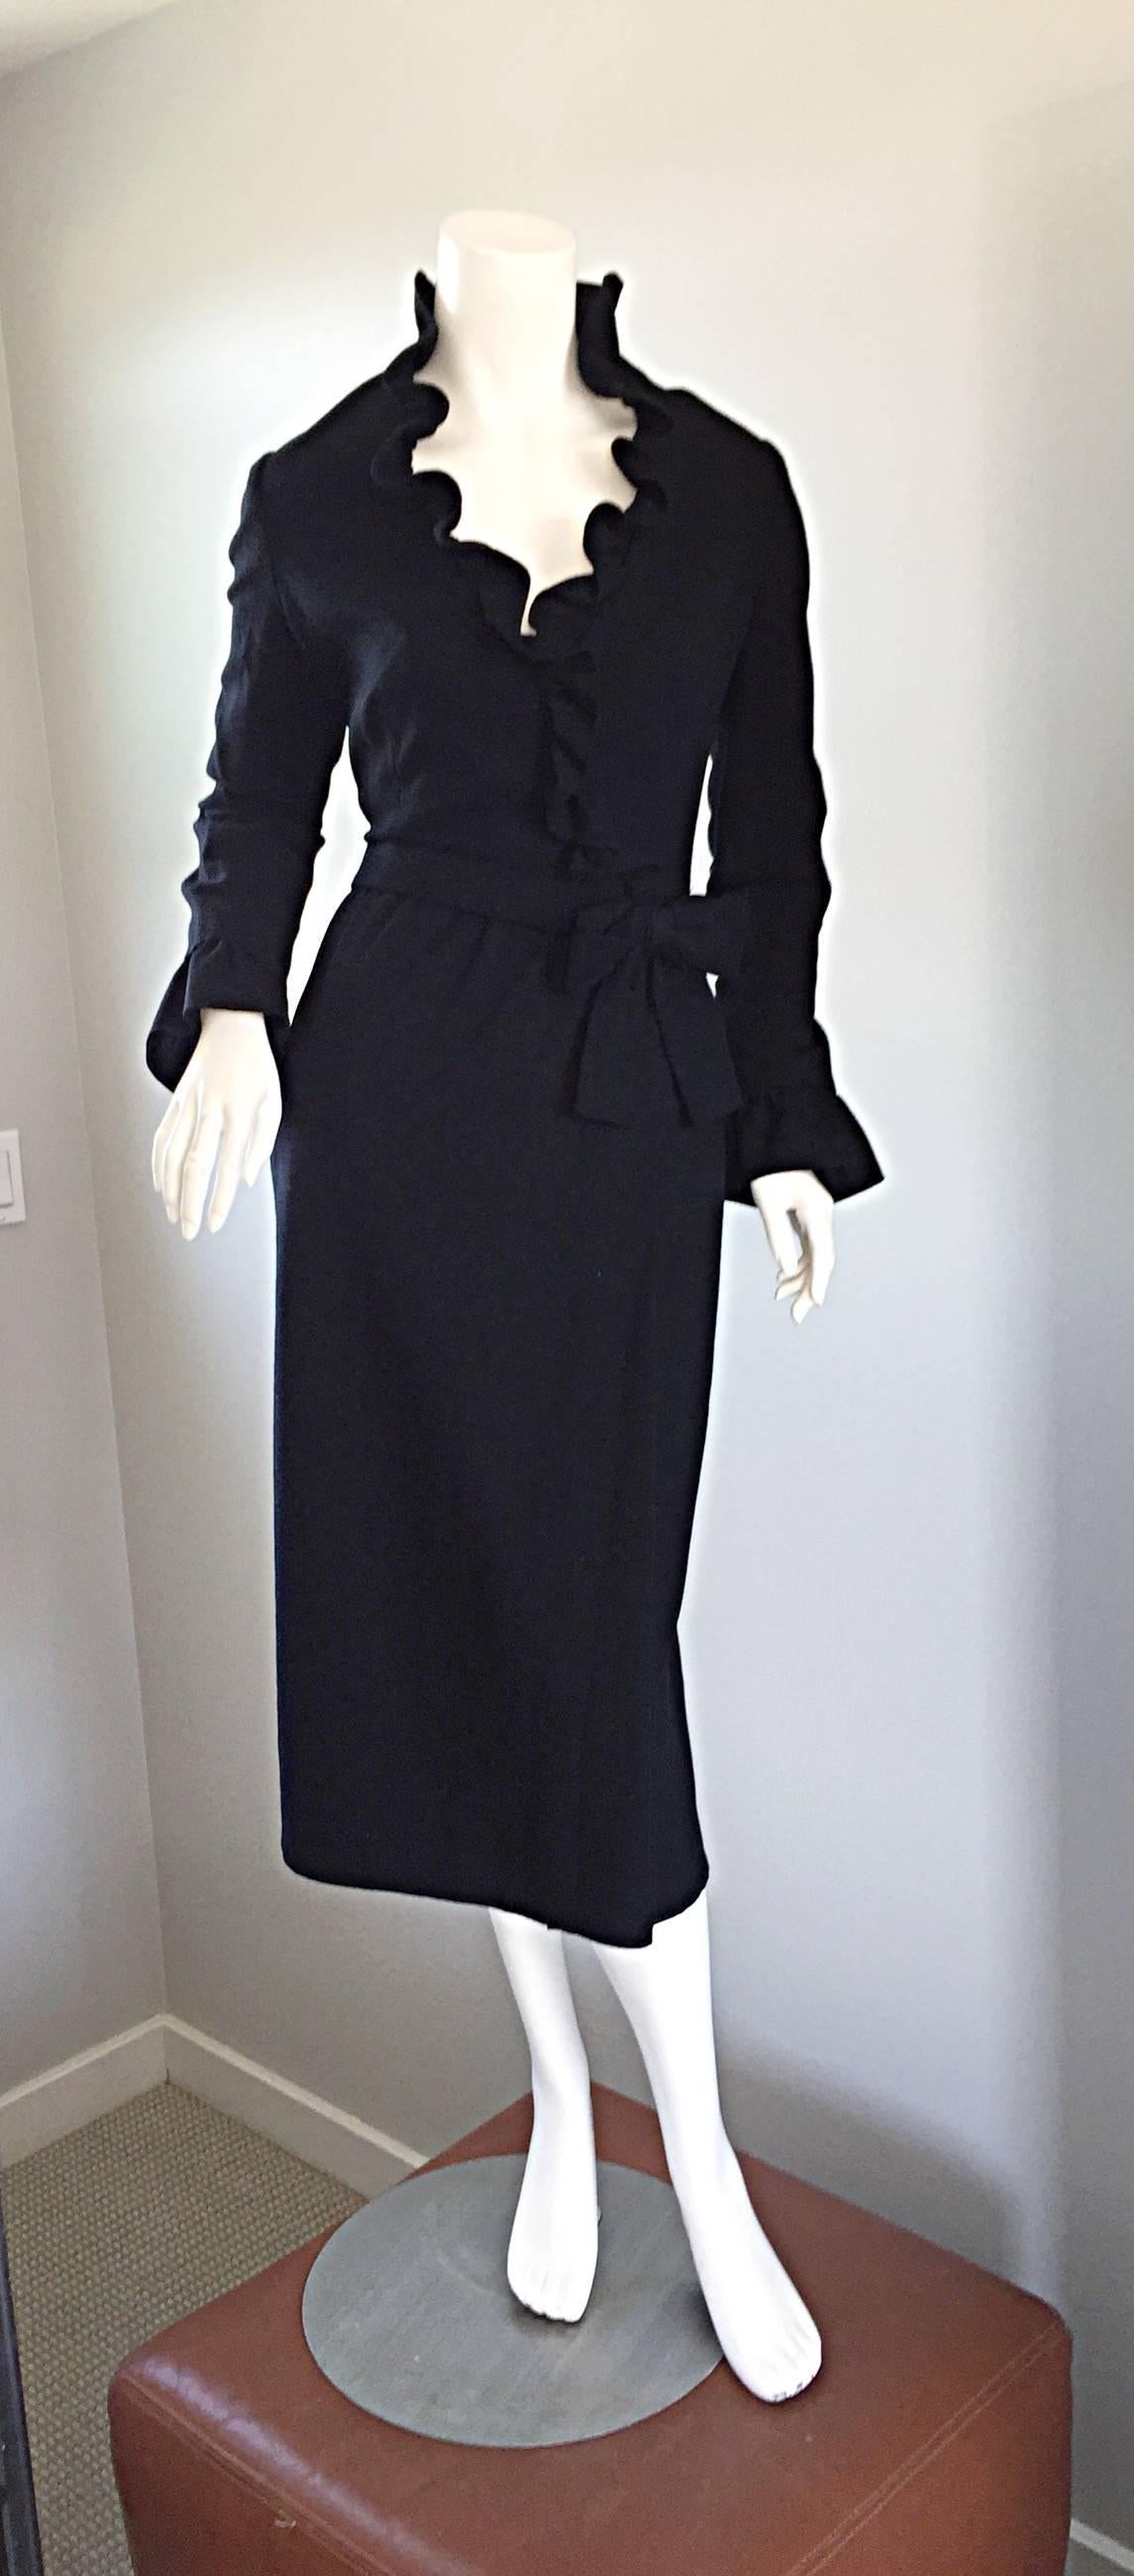 Chic Mollie Parnis 1960s 60s Vintage Black Wool Wrap Dress w/ Ruffles + Bow Belt 1